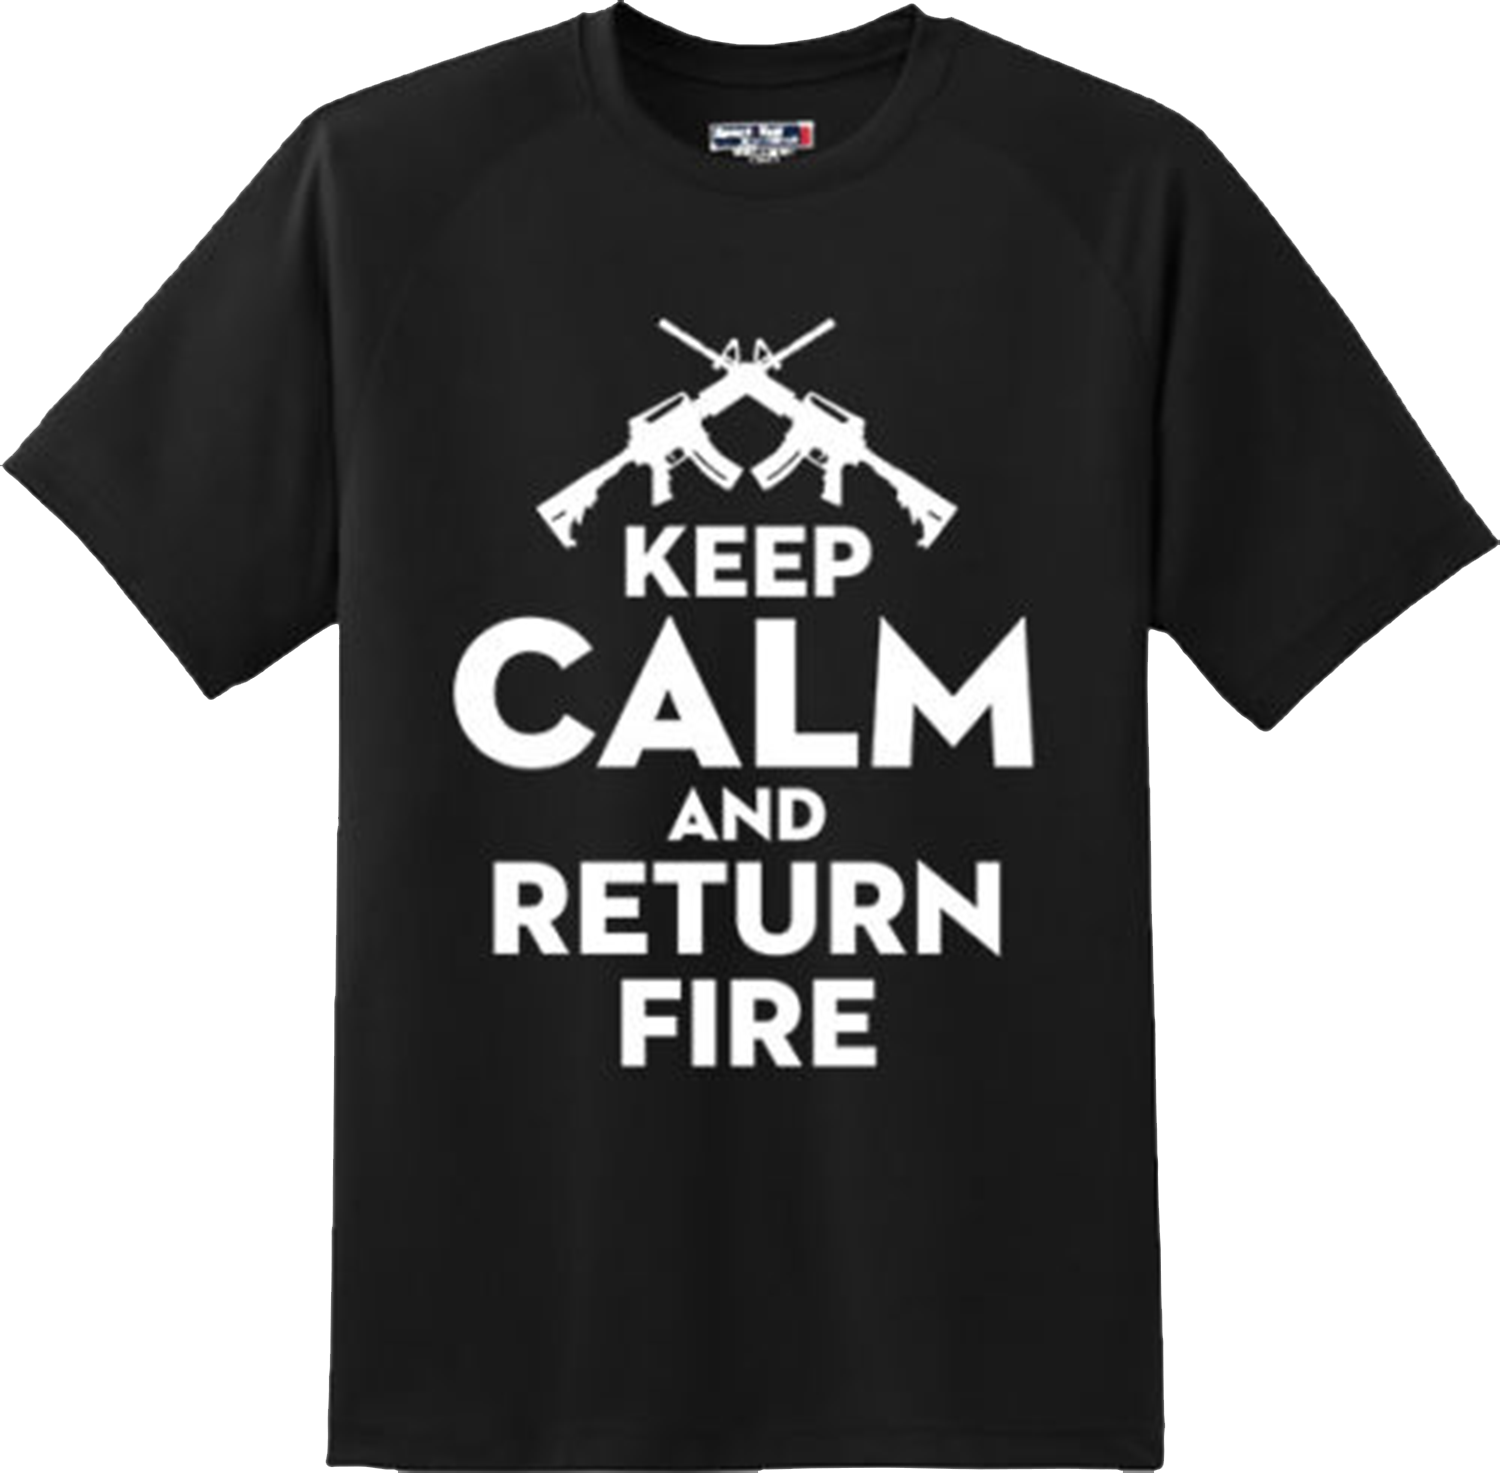 Keep Calm and Return Fire 2nd Amendment Gun Freedom T Shirt New Graphic Tee